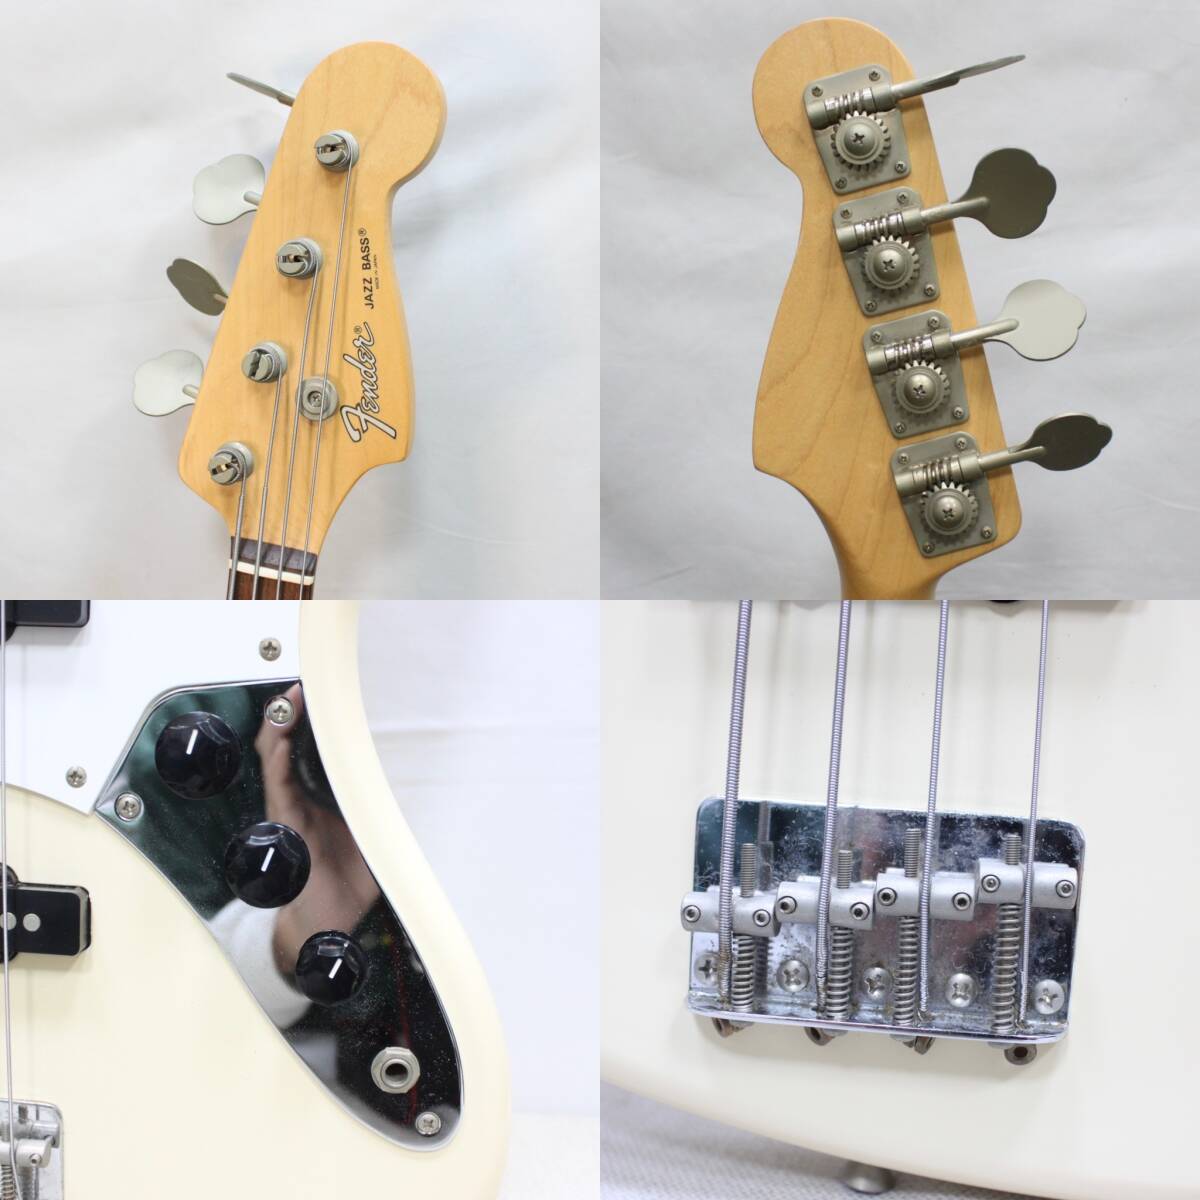 Fender fender JAZZ BASS Jazz base MADEIN JAPAN JB-40 white 1993-1994 Fujigen made ( control ID:573)